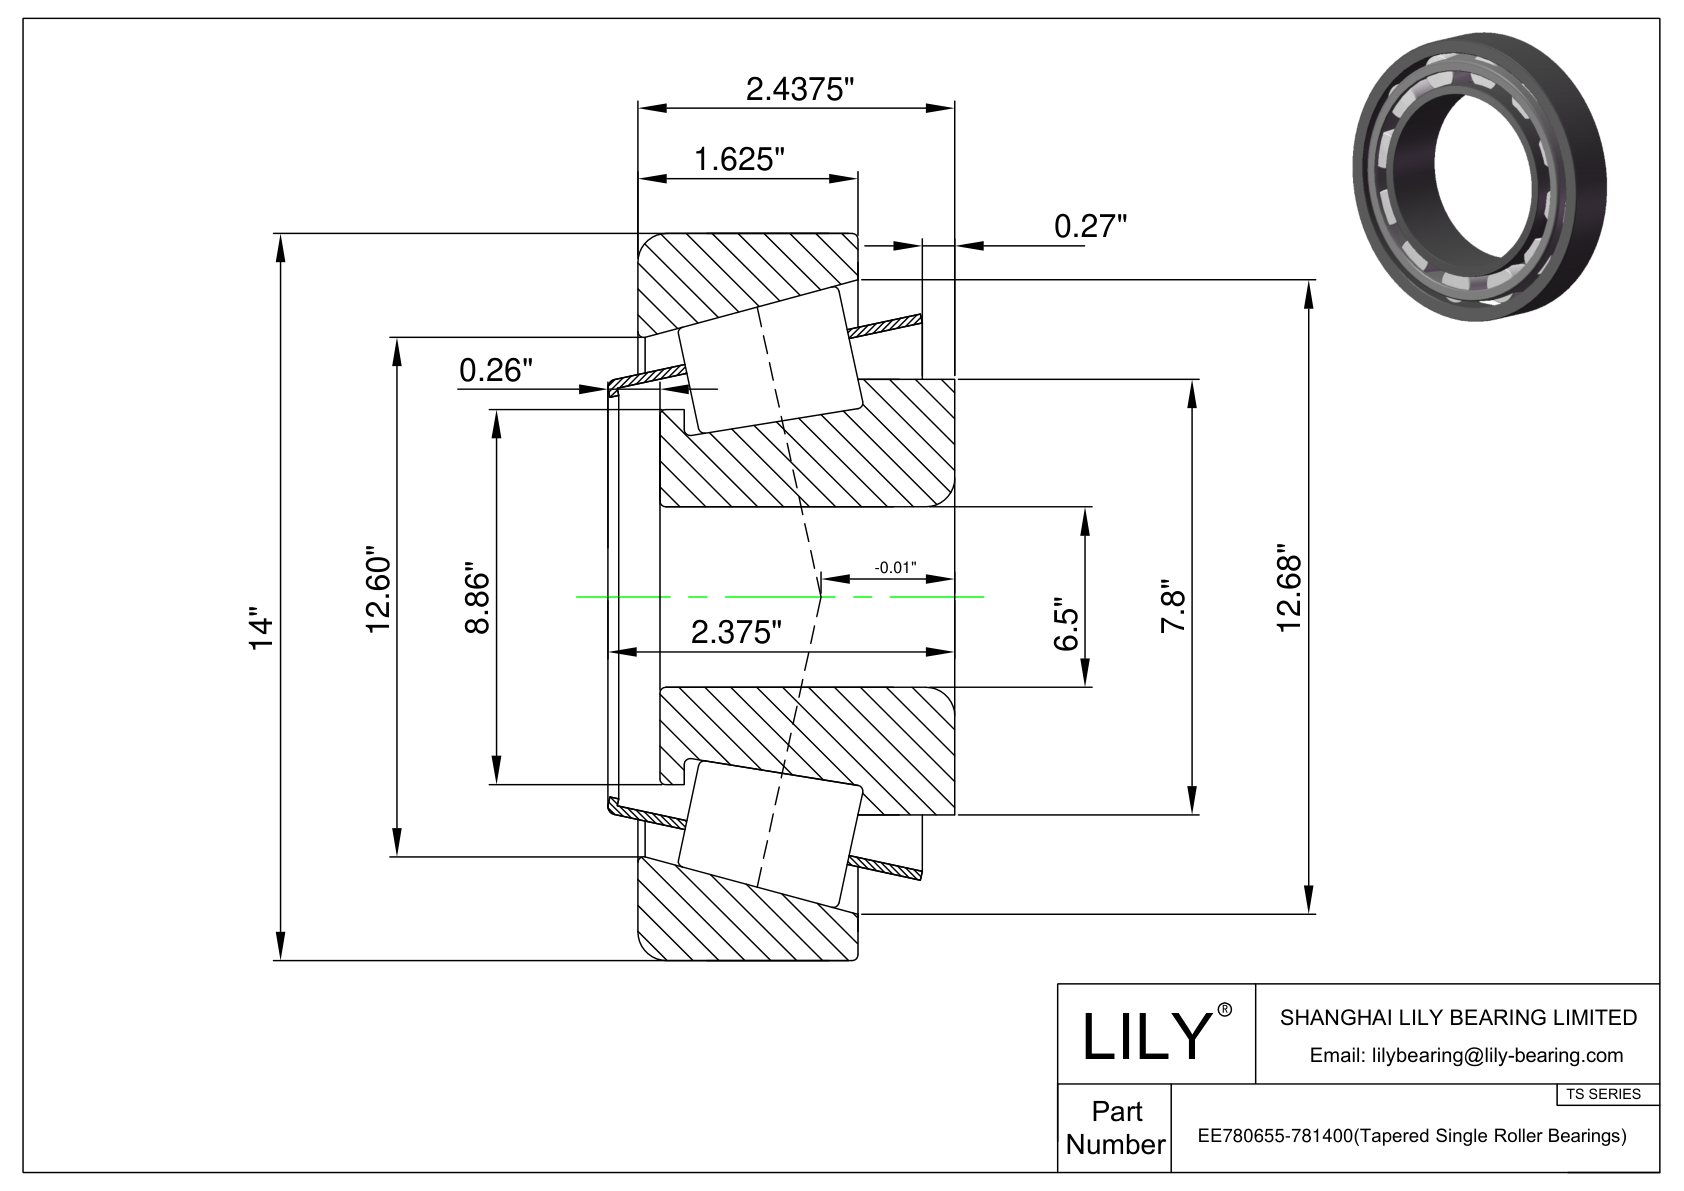 EE780655-781400 TS系列(圆锥单滚子轴承)(英制) CAD图形